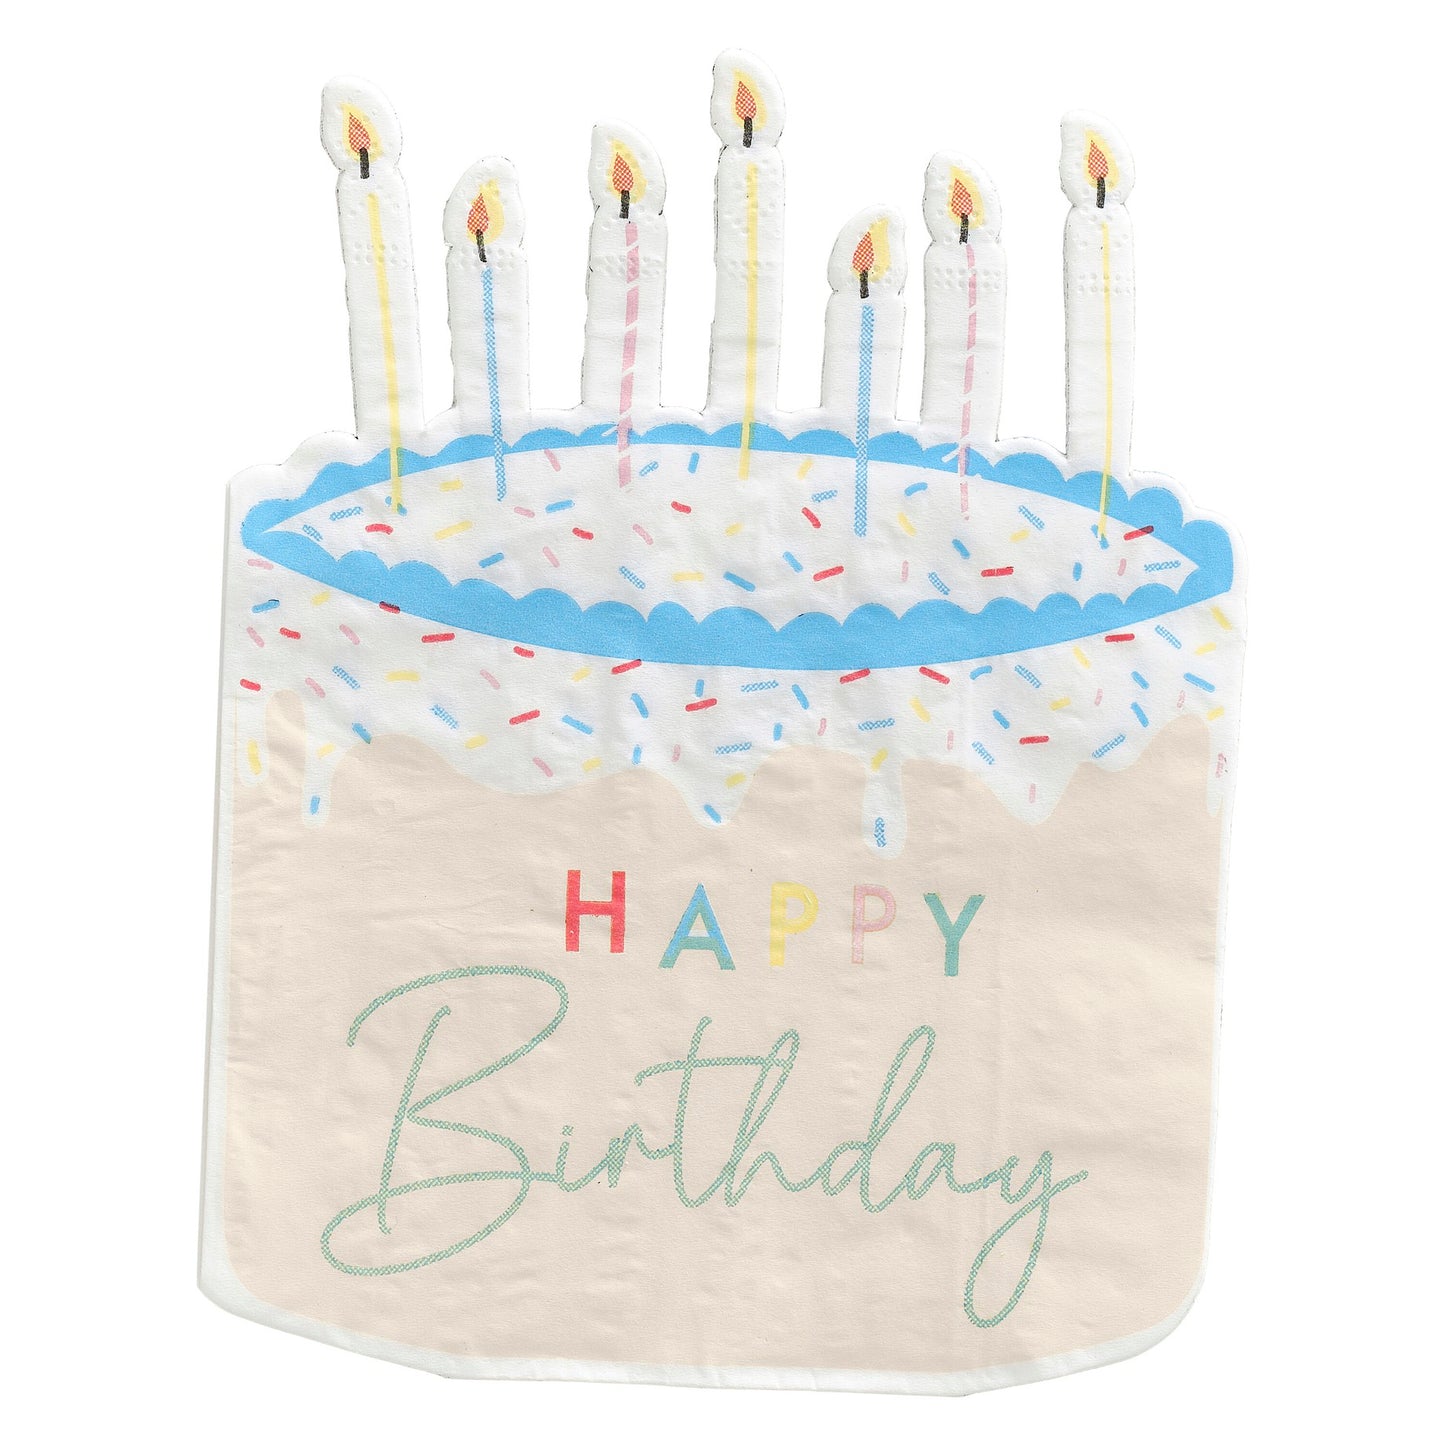 Cake Shaped Happy Birthday Paper Napkins - 16pk